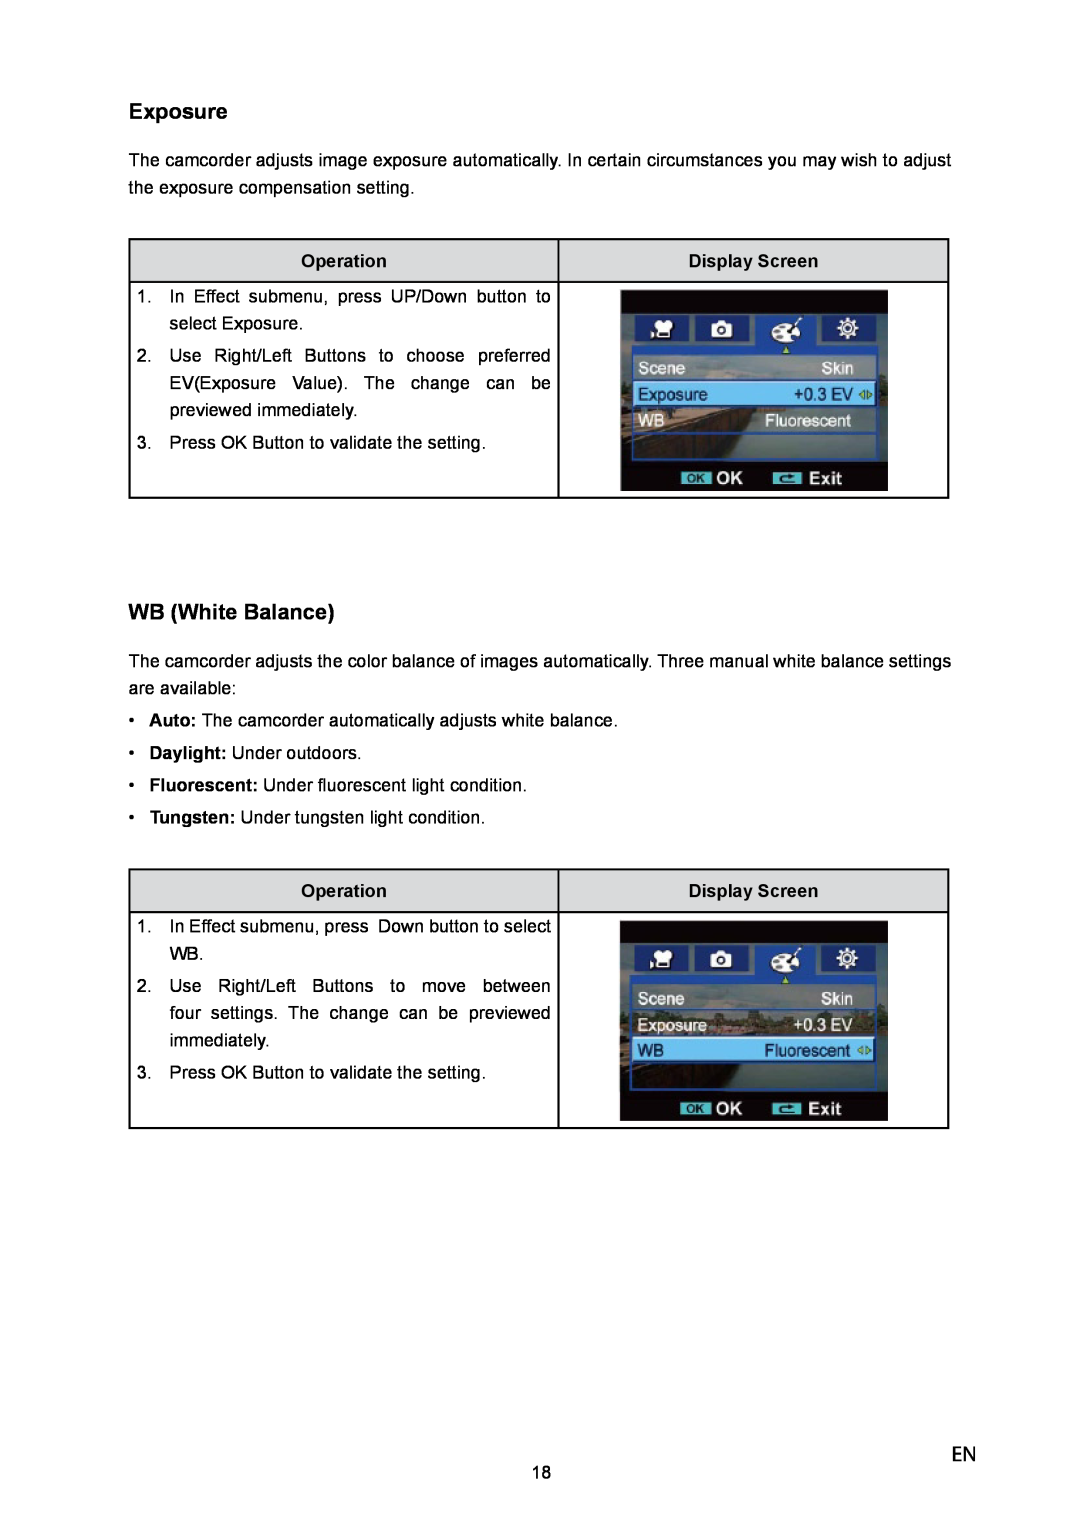 Toshiba P10 user manual Exposure, WB White Balance, Operation, Display Screen 